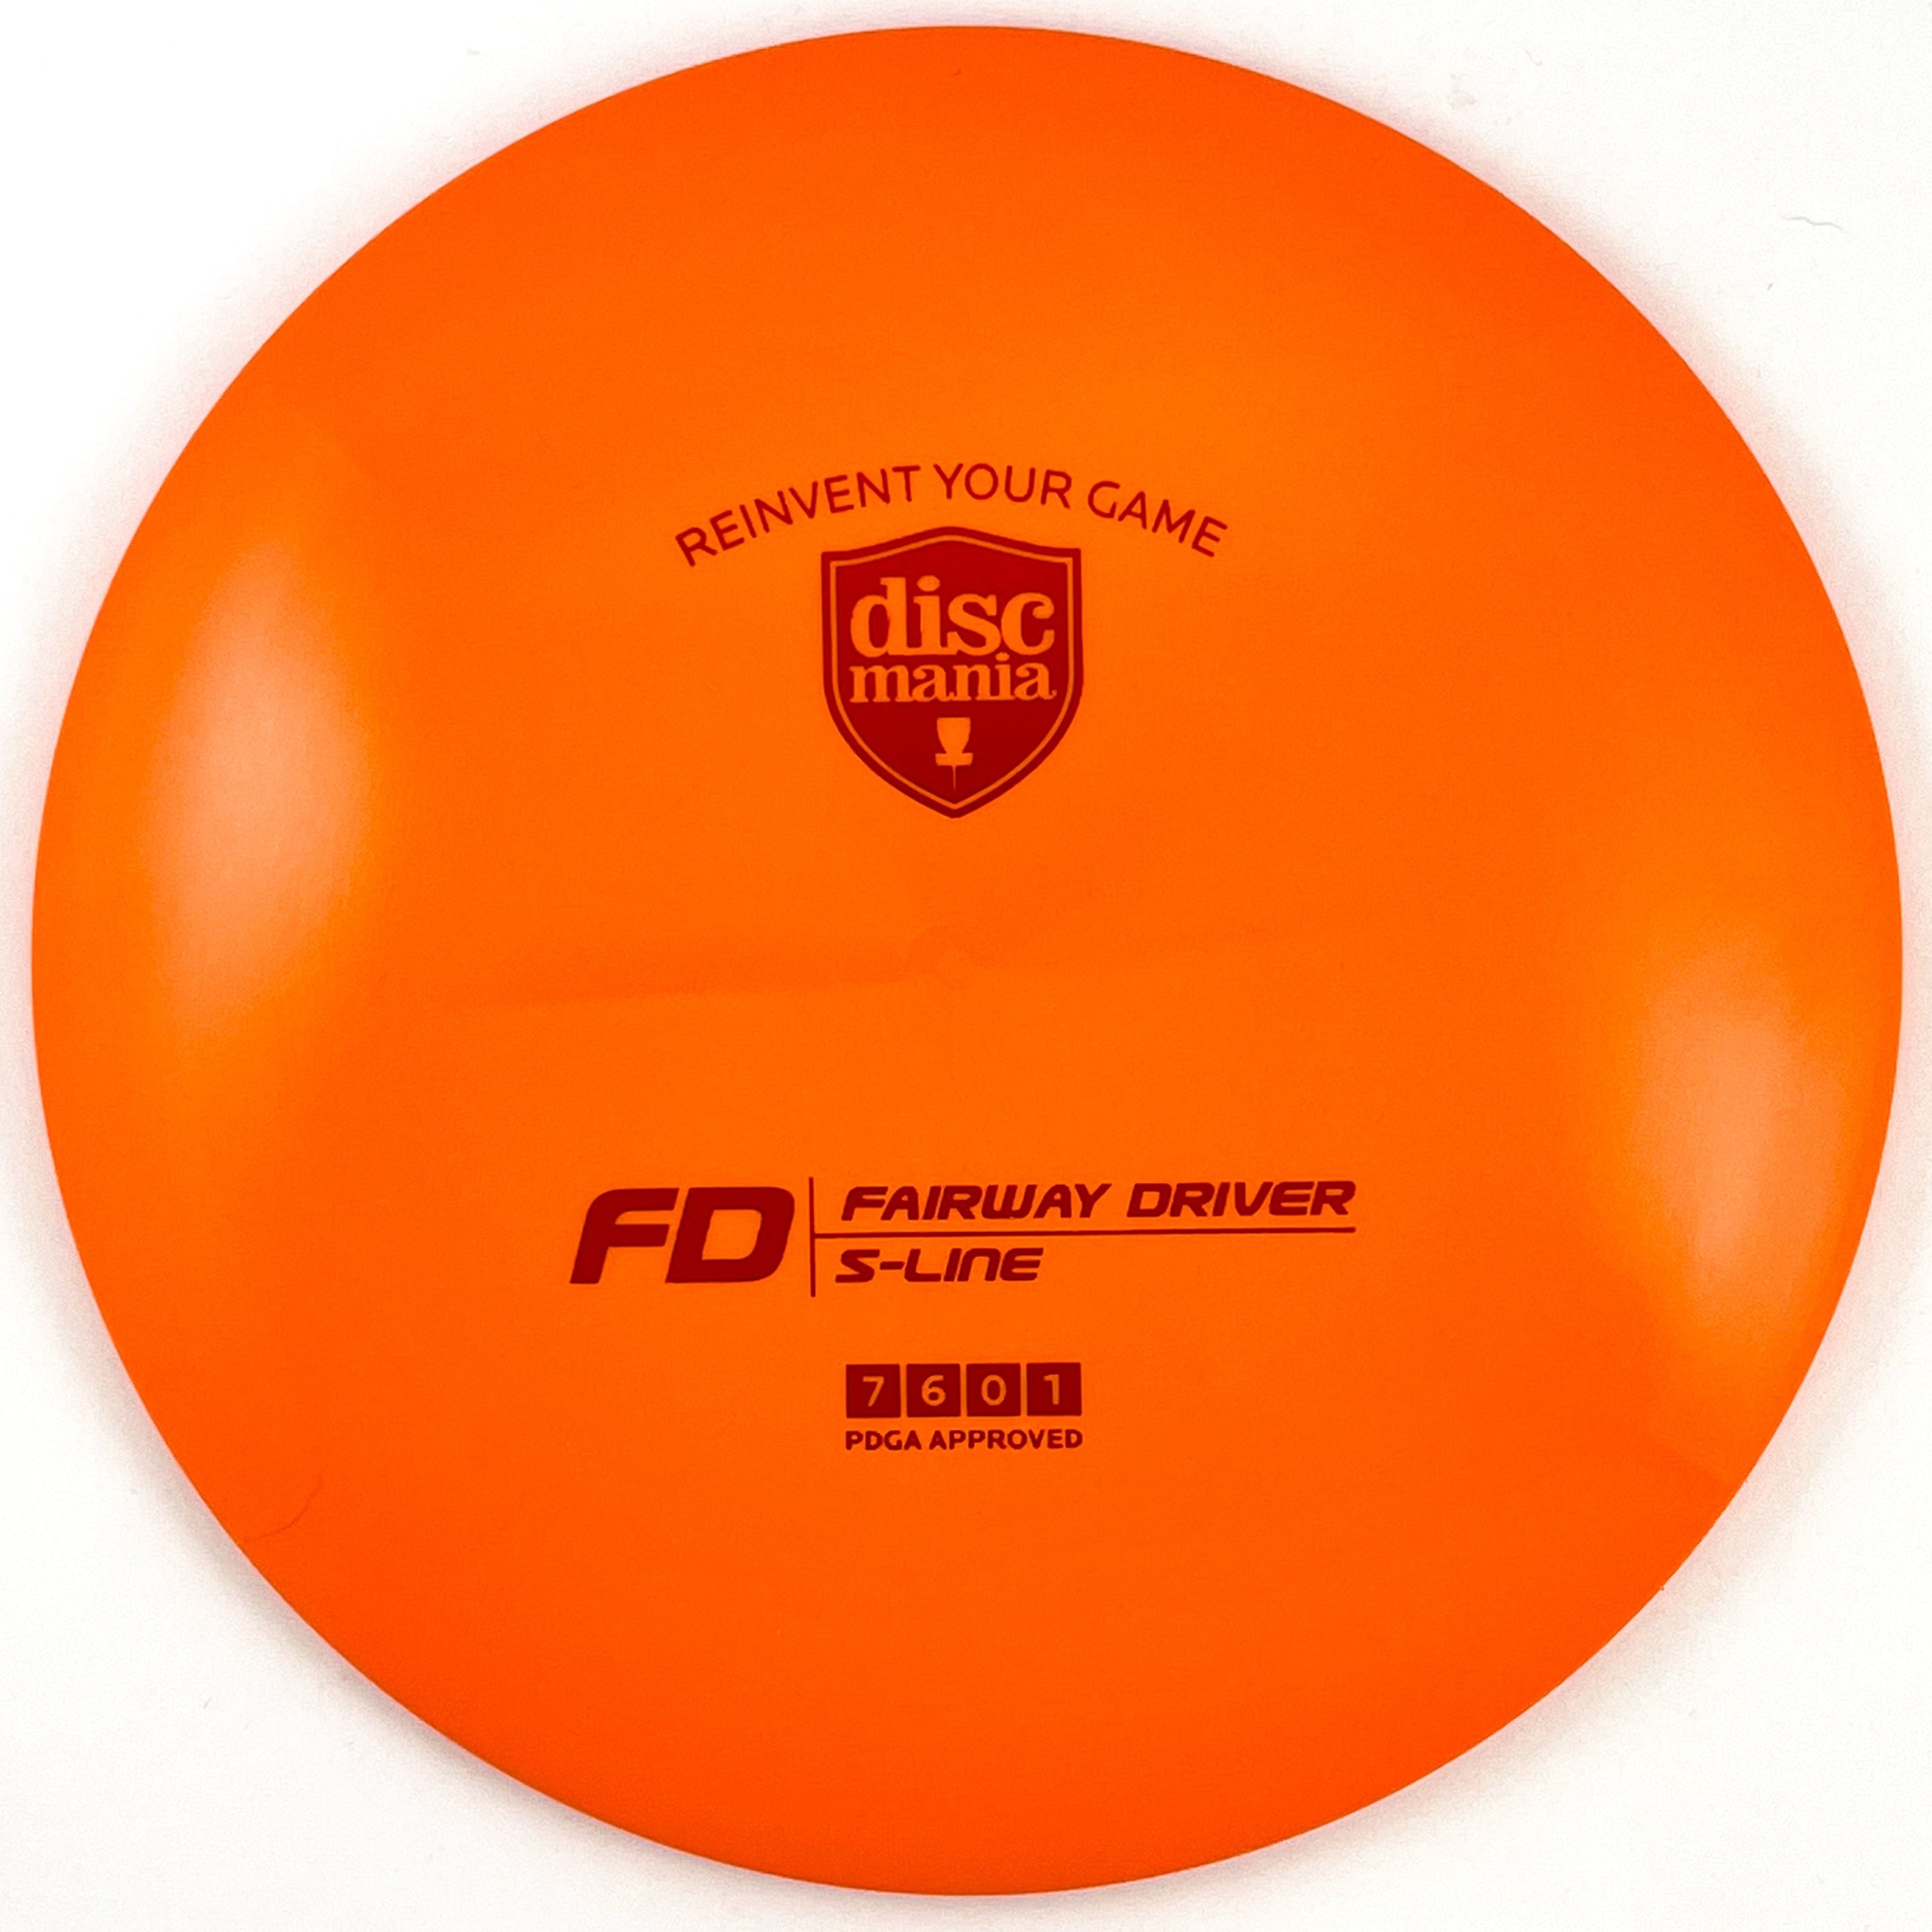 Discmania S-Line FD disc golf fairway driver by Discmania Golf Discs.